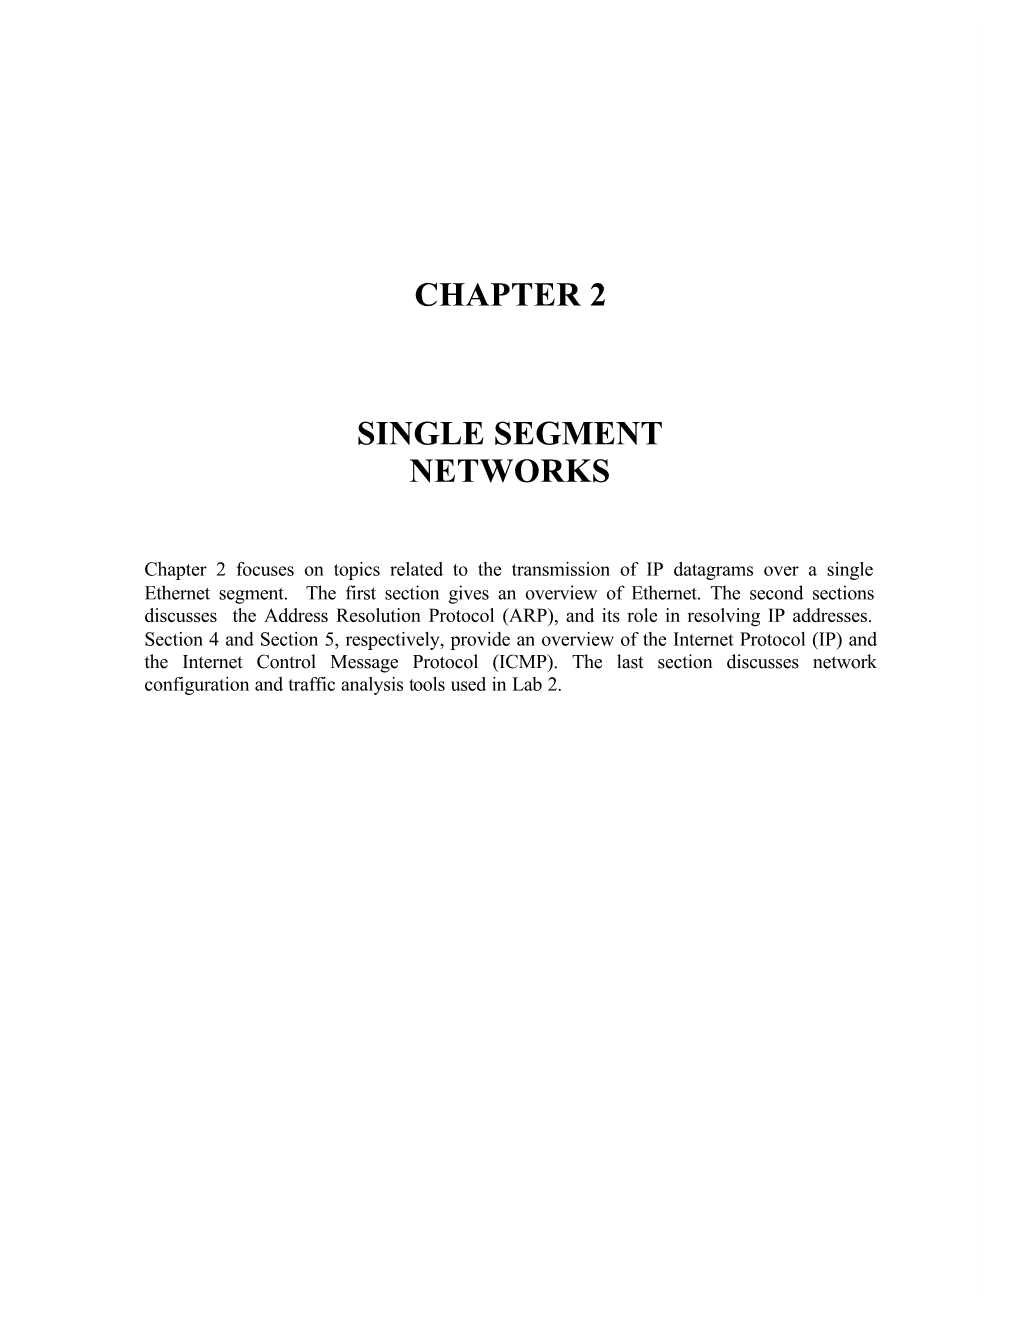 Single Segment Networks